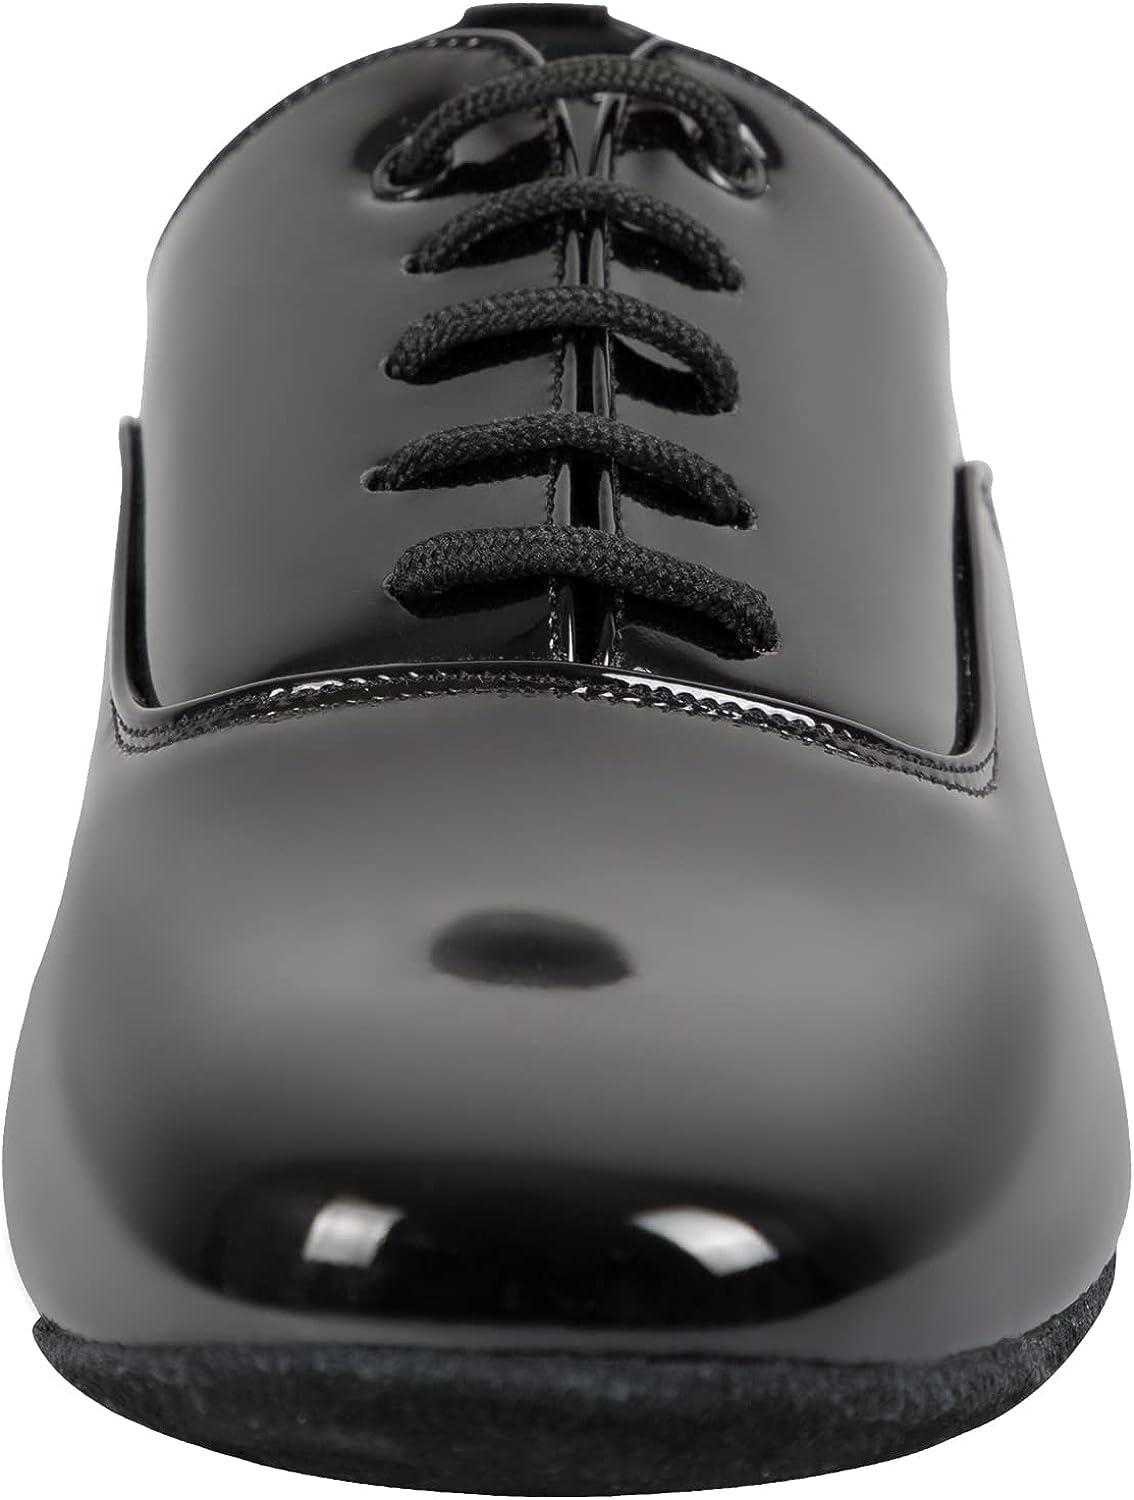  Linodes Men's Latin Dance Shoes 1 Inch Leather Sole Ballroom  Salsa Tango Waltz Character Shoe-Black-6M